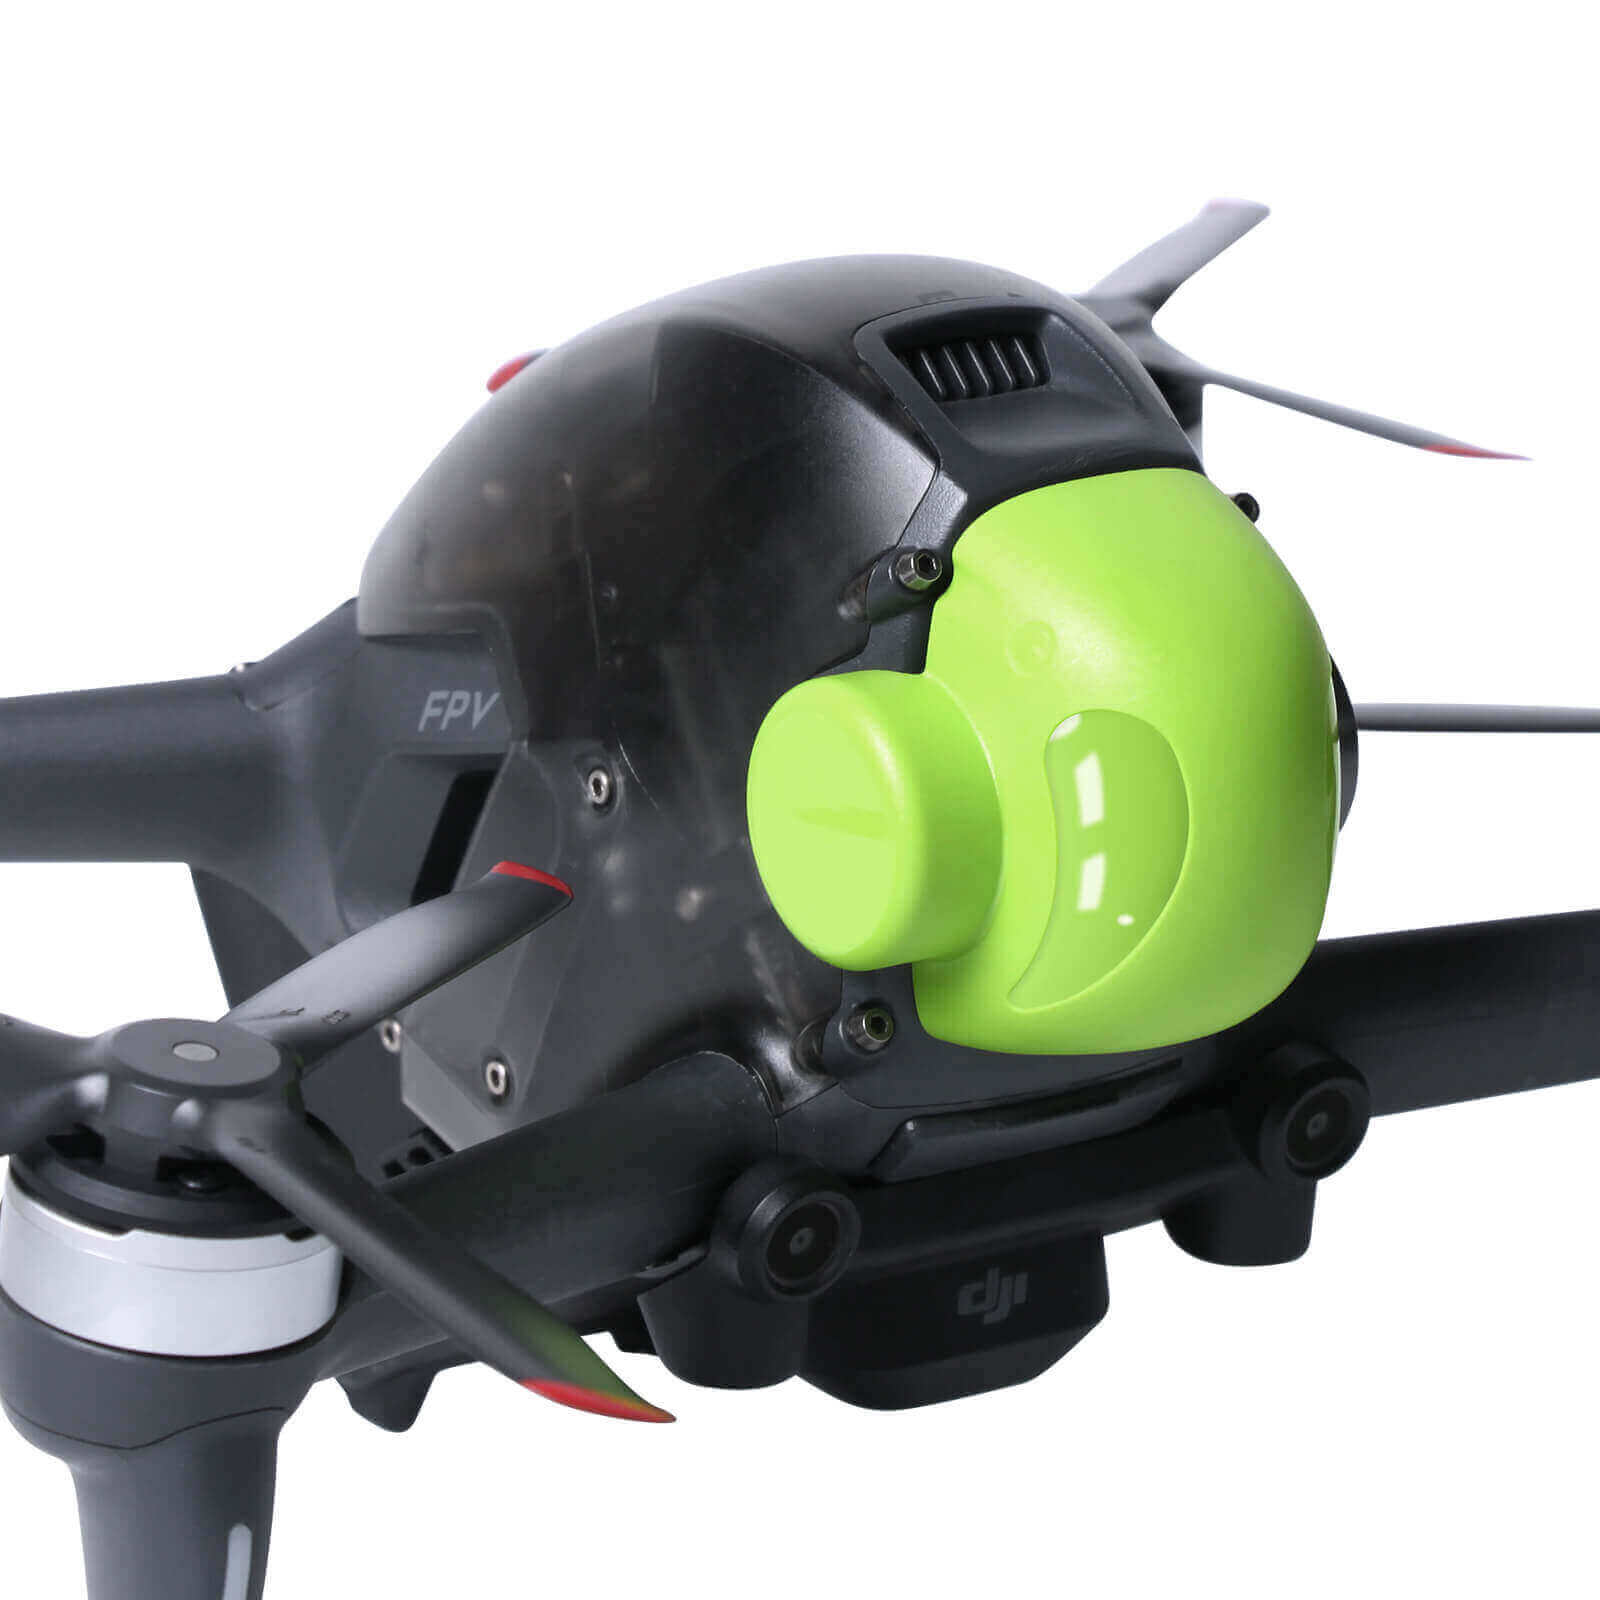 SunnyLIFE DJI FPV Drohne Gimbal Transport Schutz